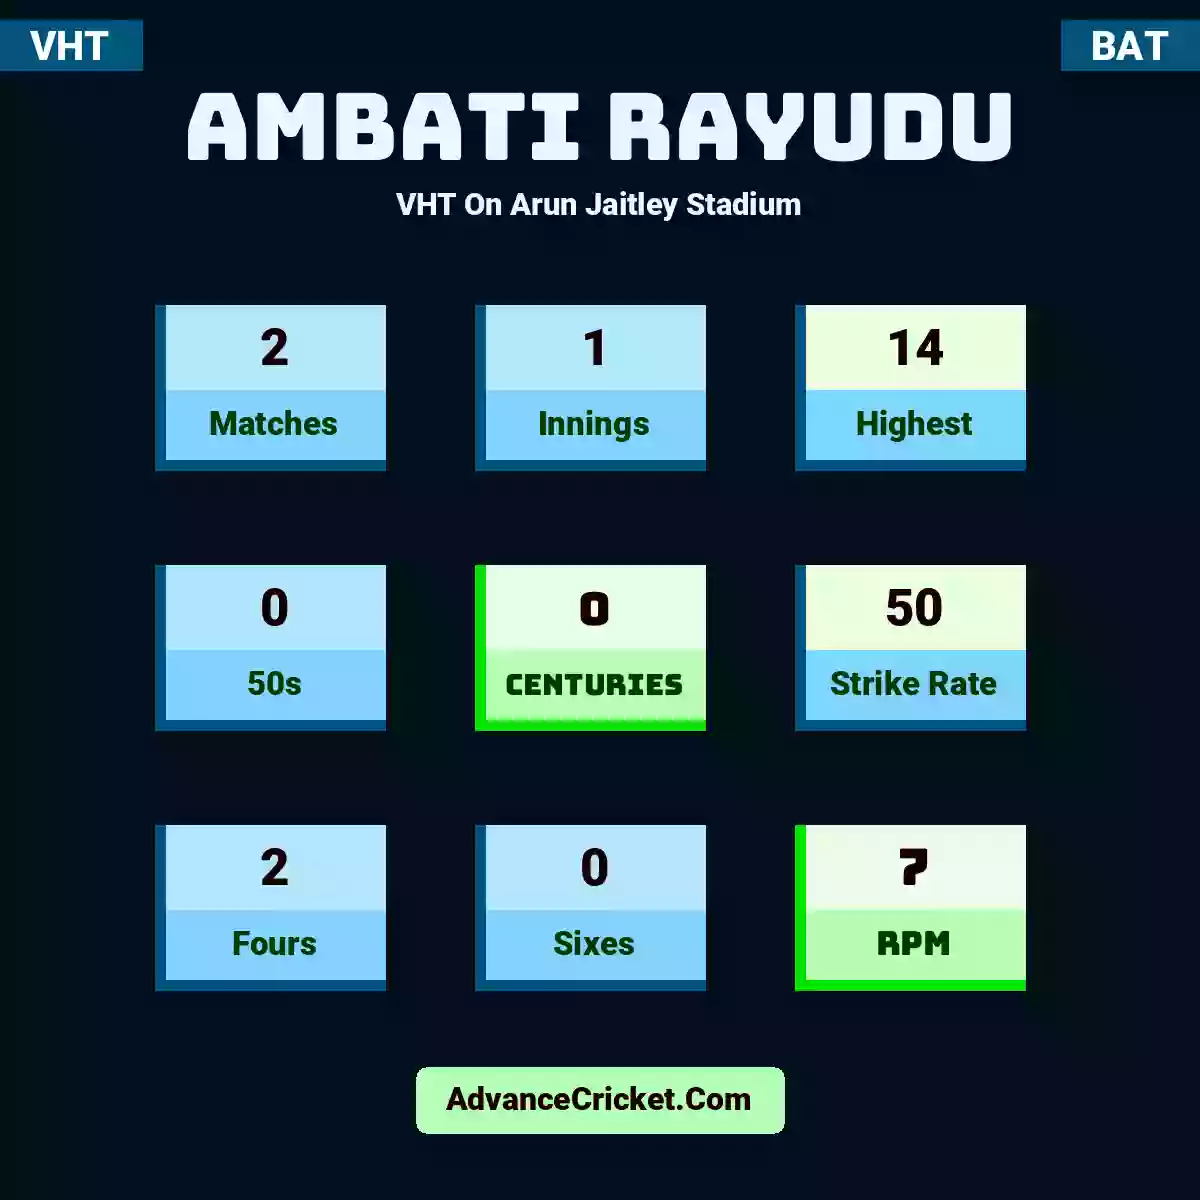 Ambati Rayudu VHT  On Arun Jaitley Stadium, Ambati Rayudu played 2 matches, scored 14 runs as highest, 0 half-centuries, and 0 centuries, with a strike rate of 50. A.Rayudu hit 2 fours and 0 sixes, with an RPM of 7.